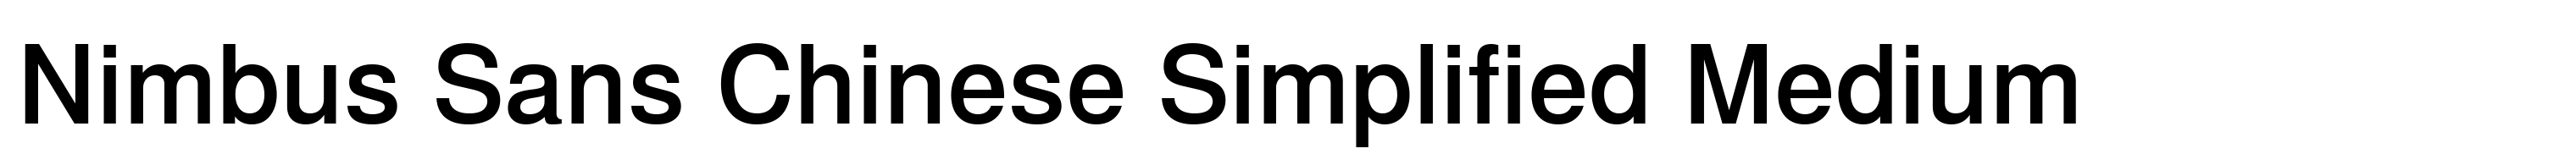 Nimbus Sans Chinese Simplified Medium